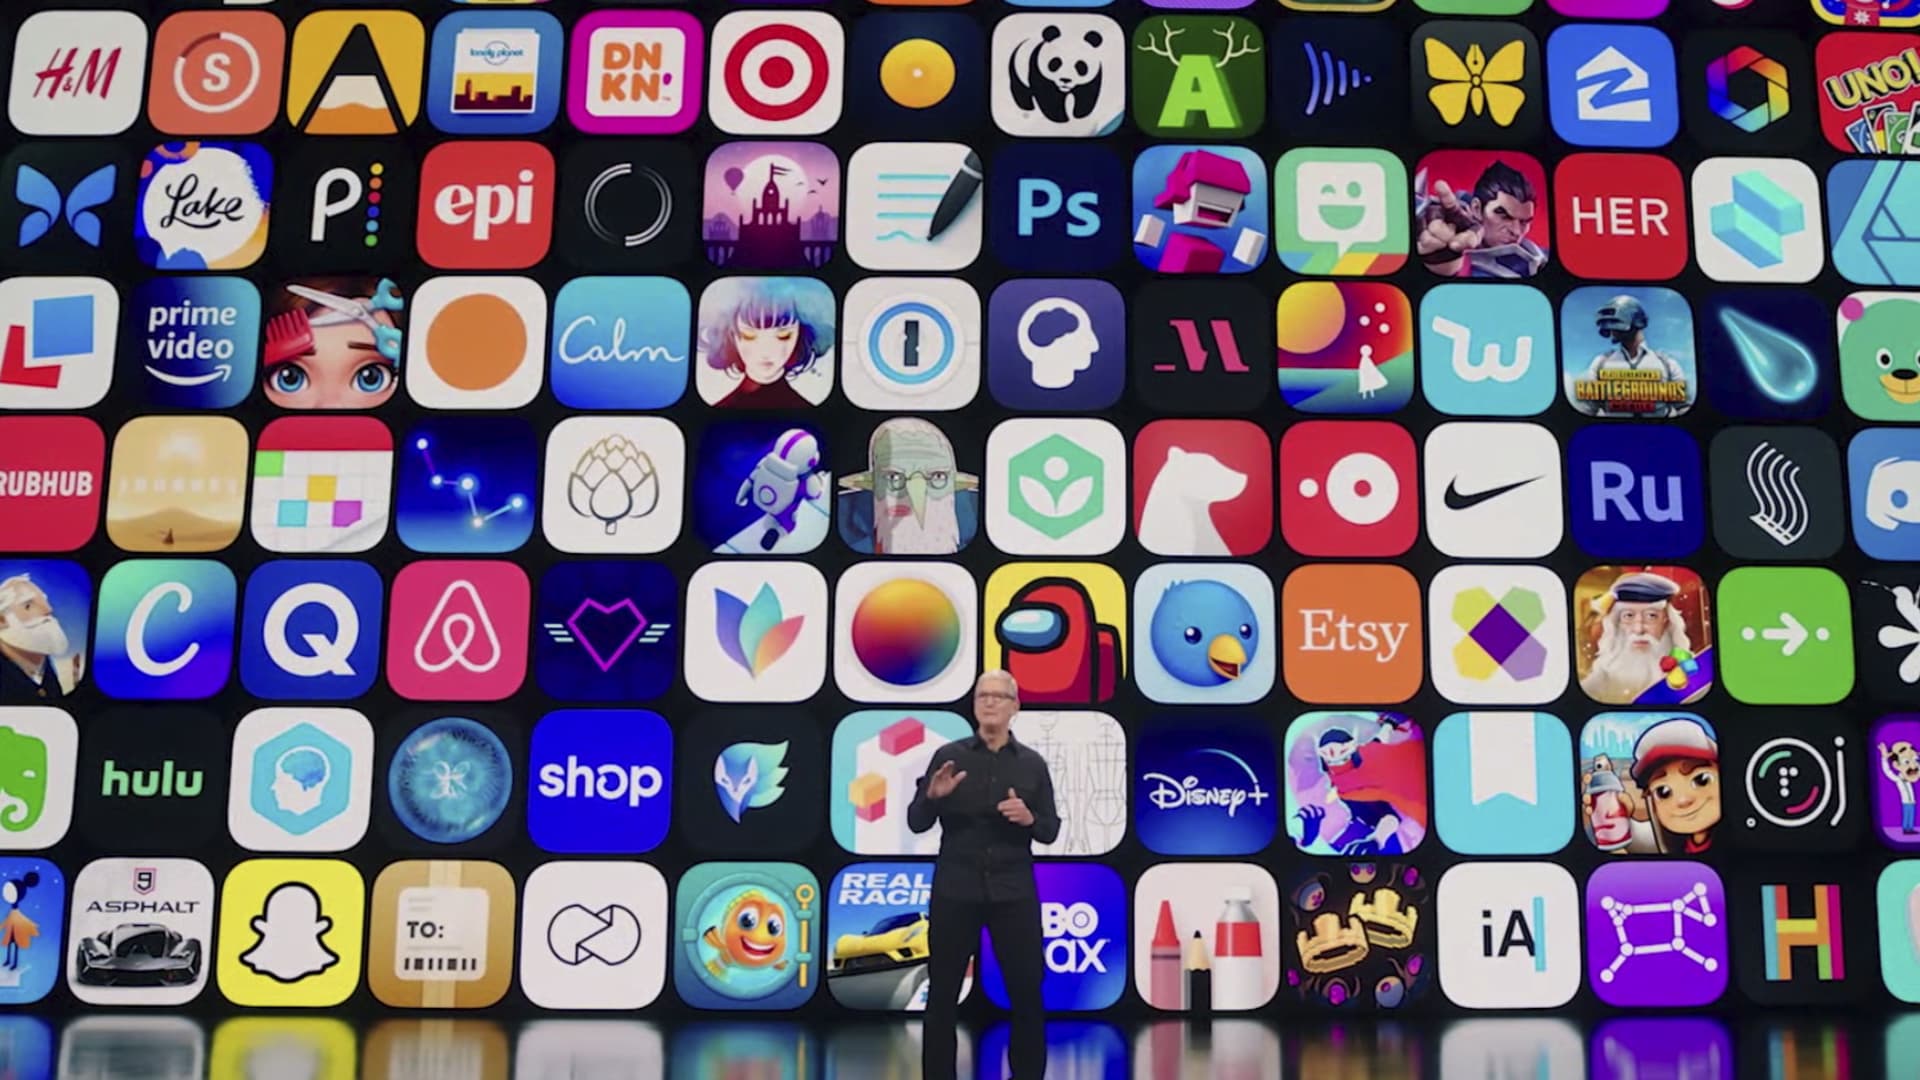 App Store - Apple